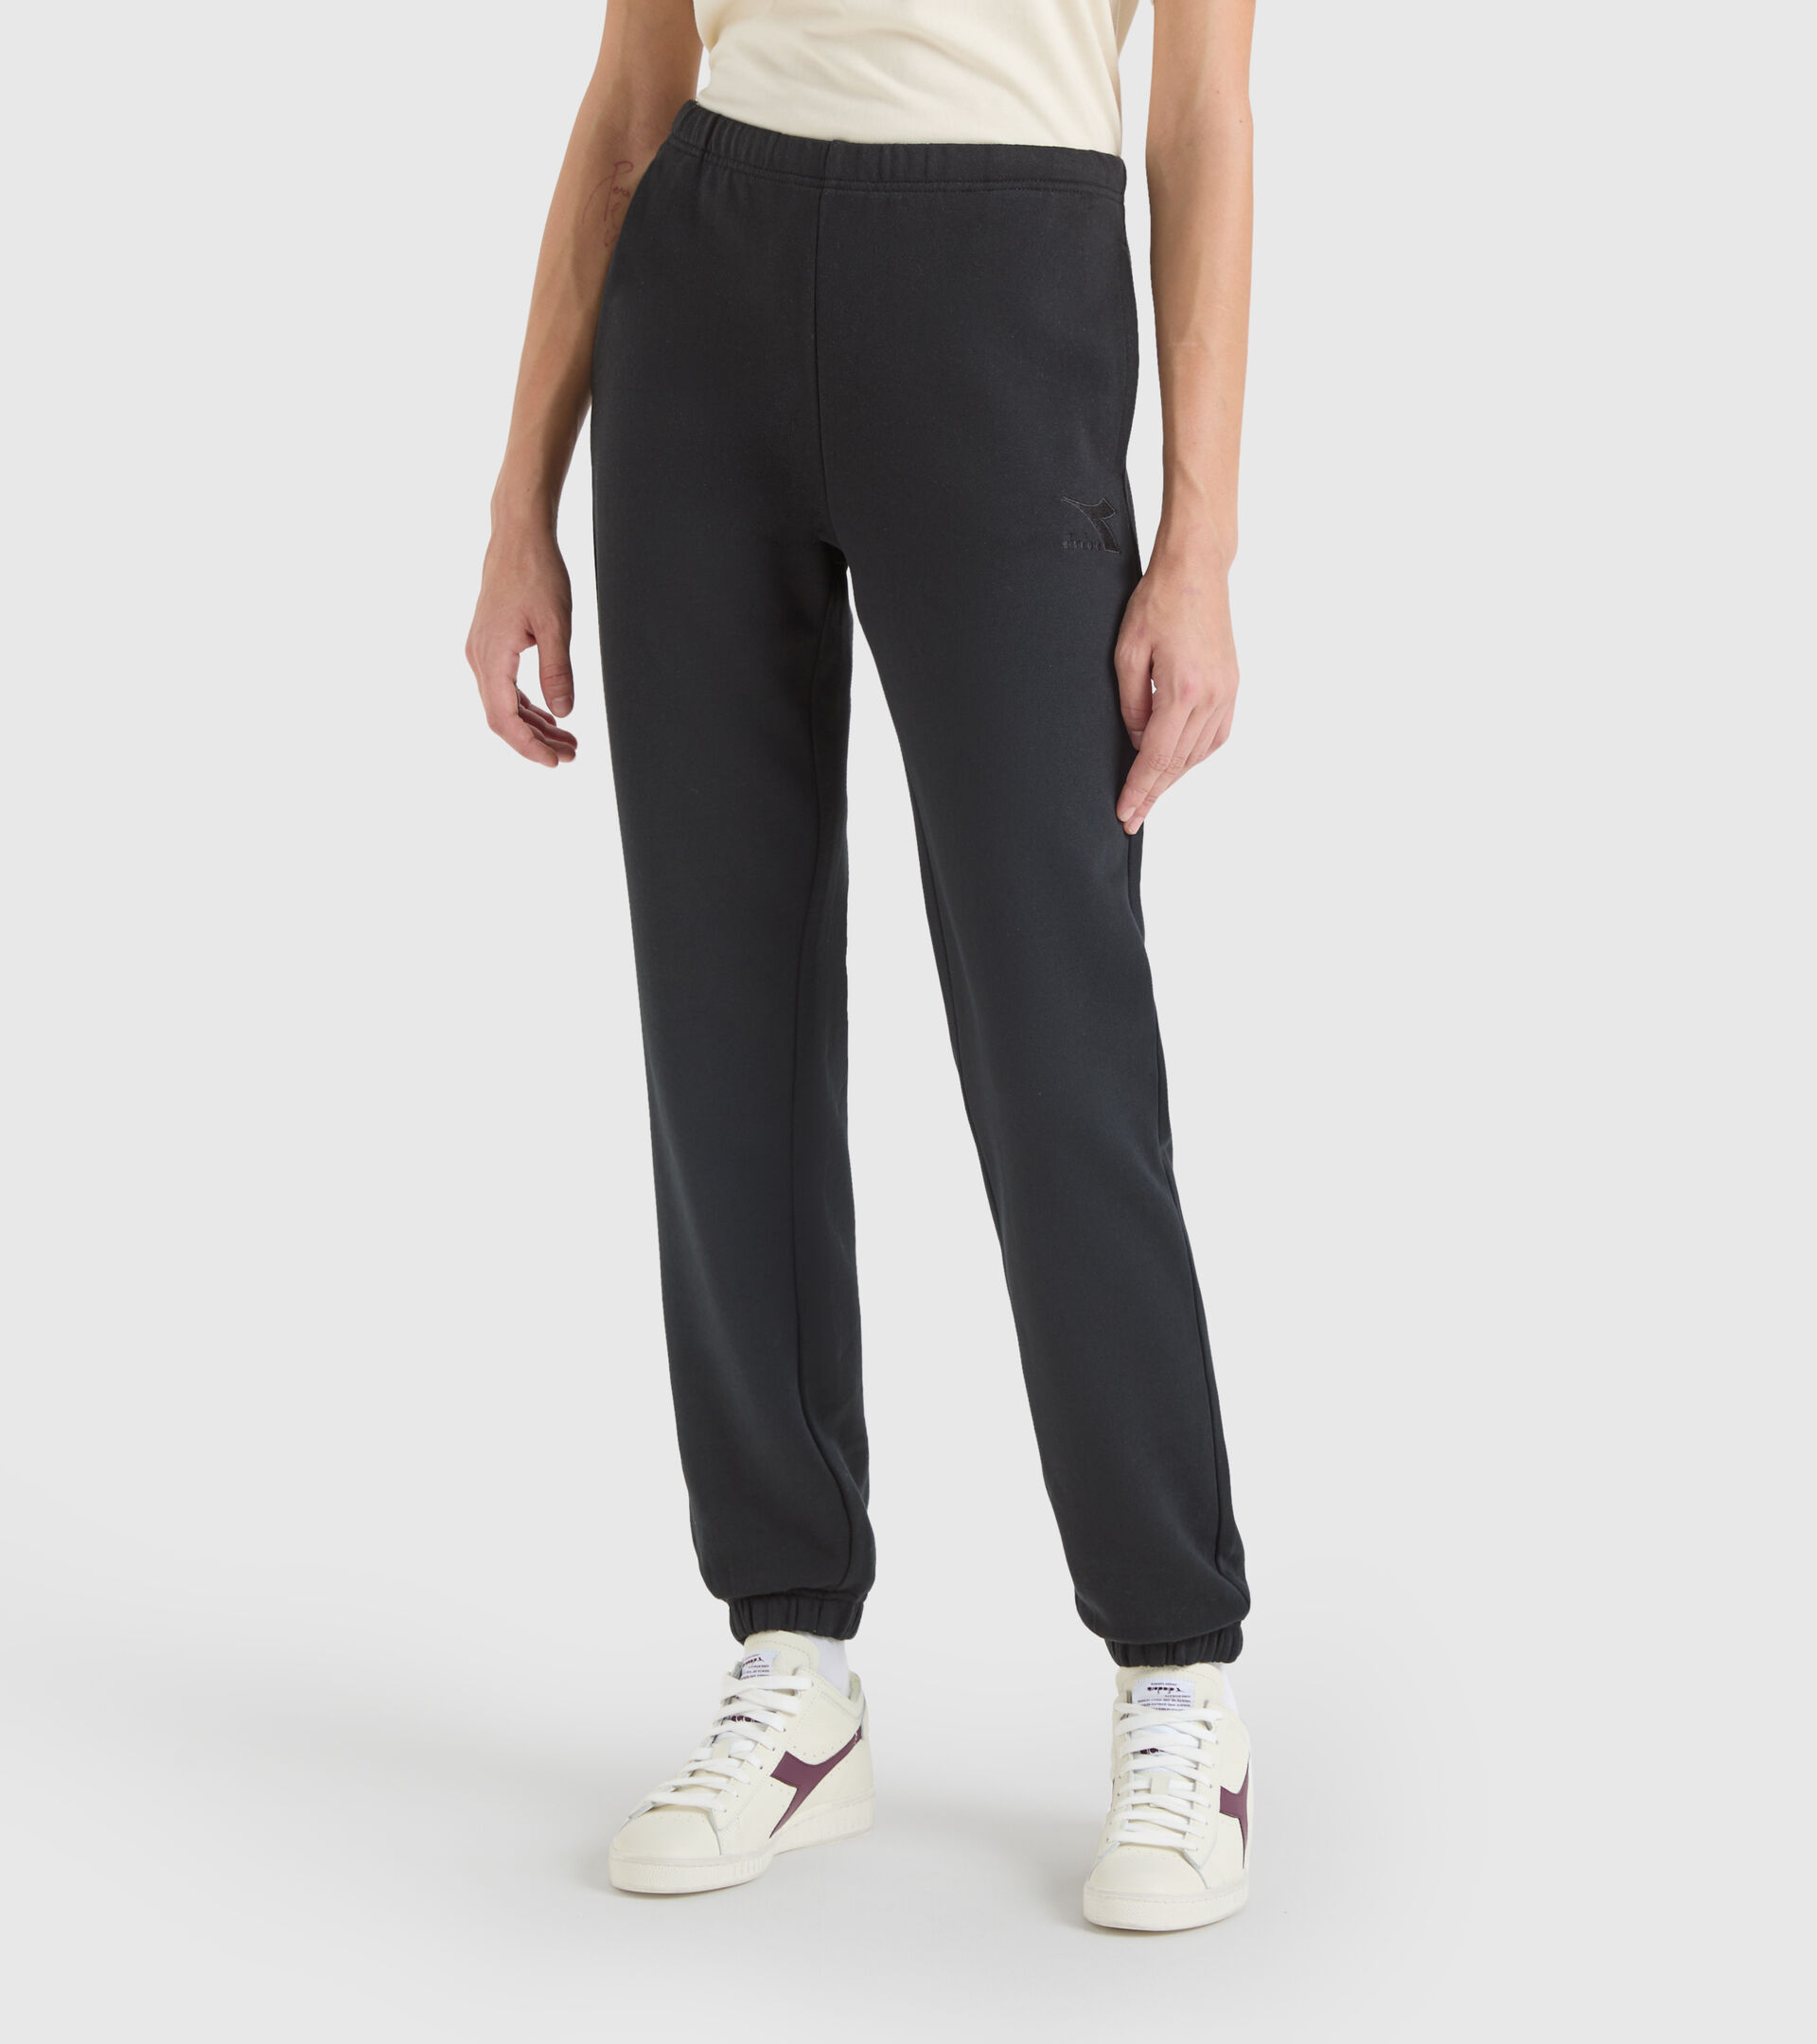 L.PANTS CUFF CORE Sports trousers - Women - Diadora Online Store NL